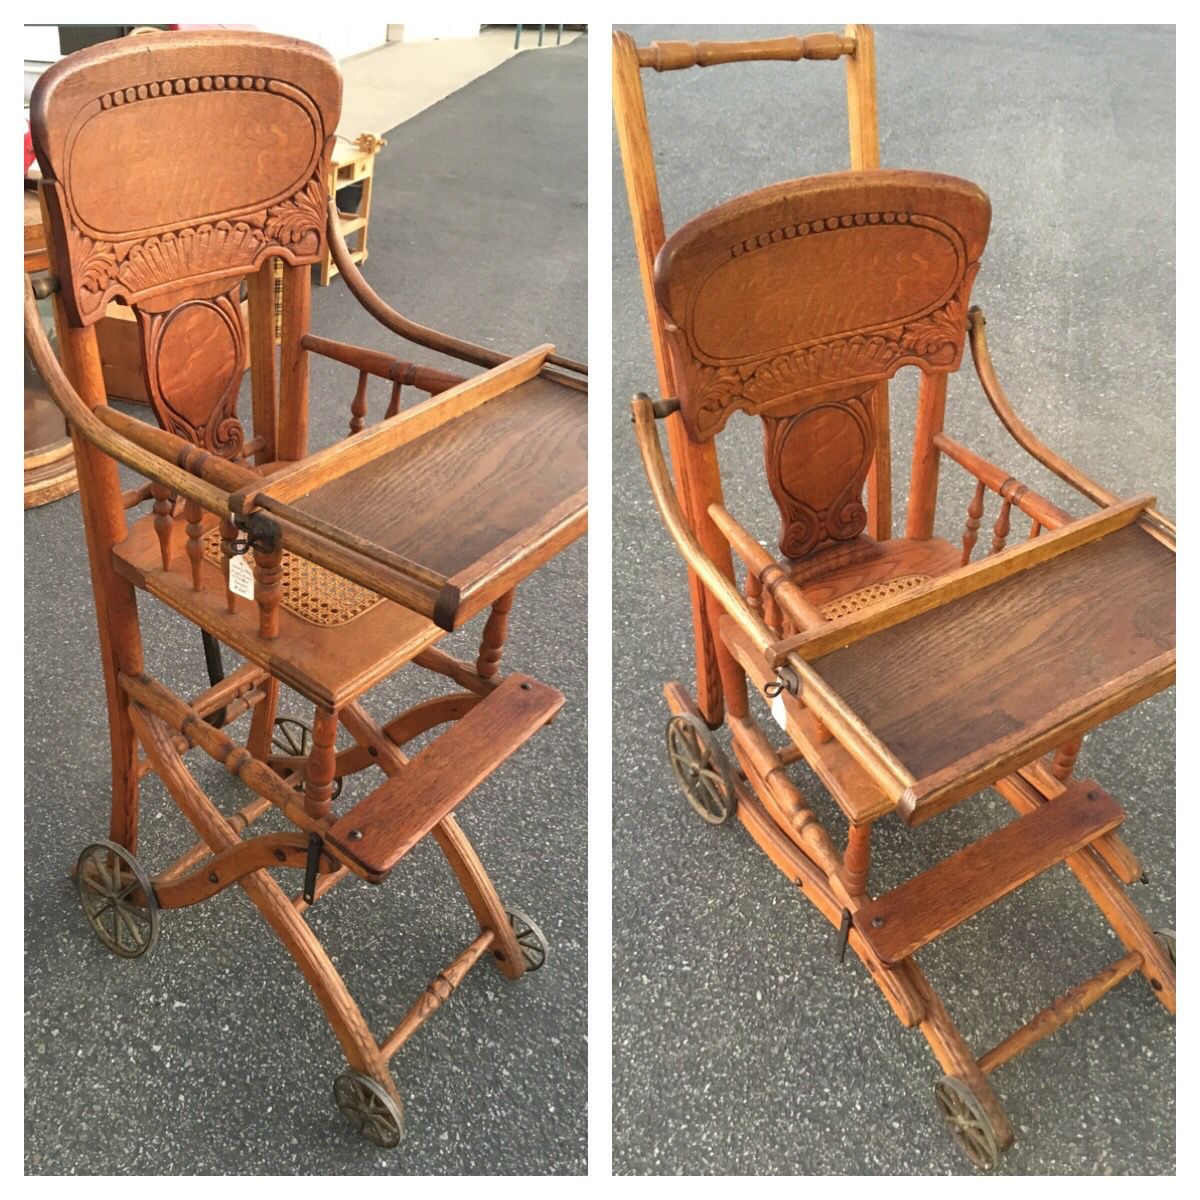 Antique High Chair Stroller Combo